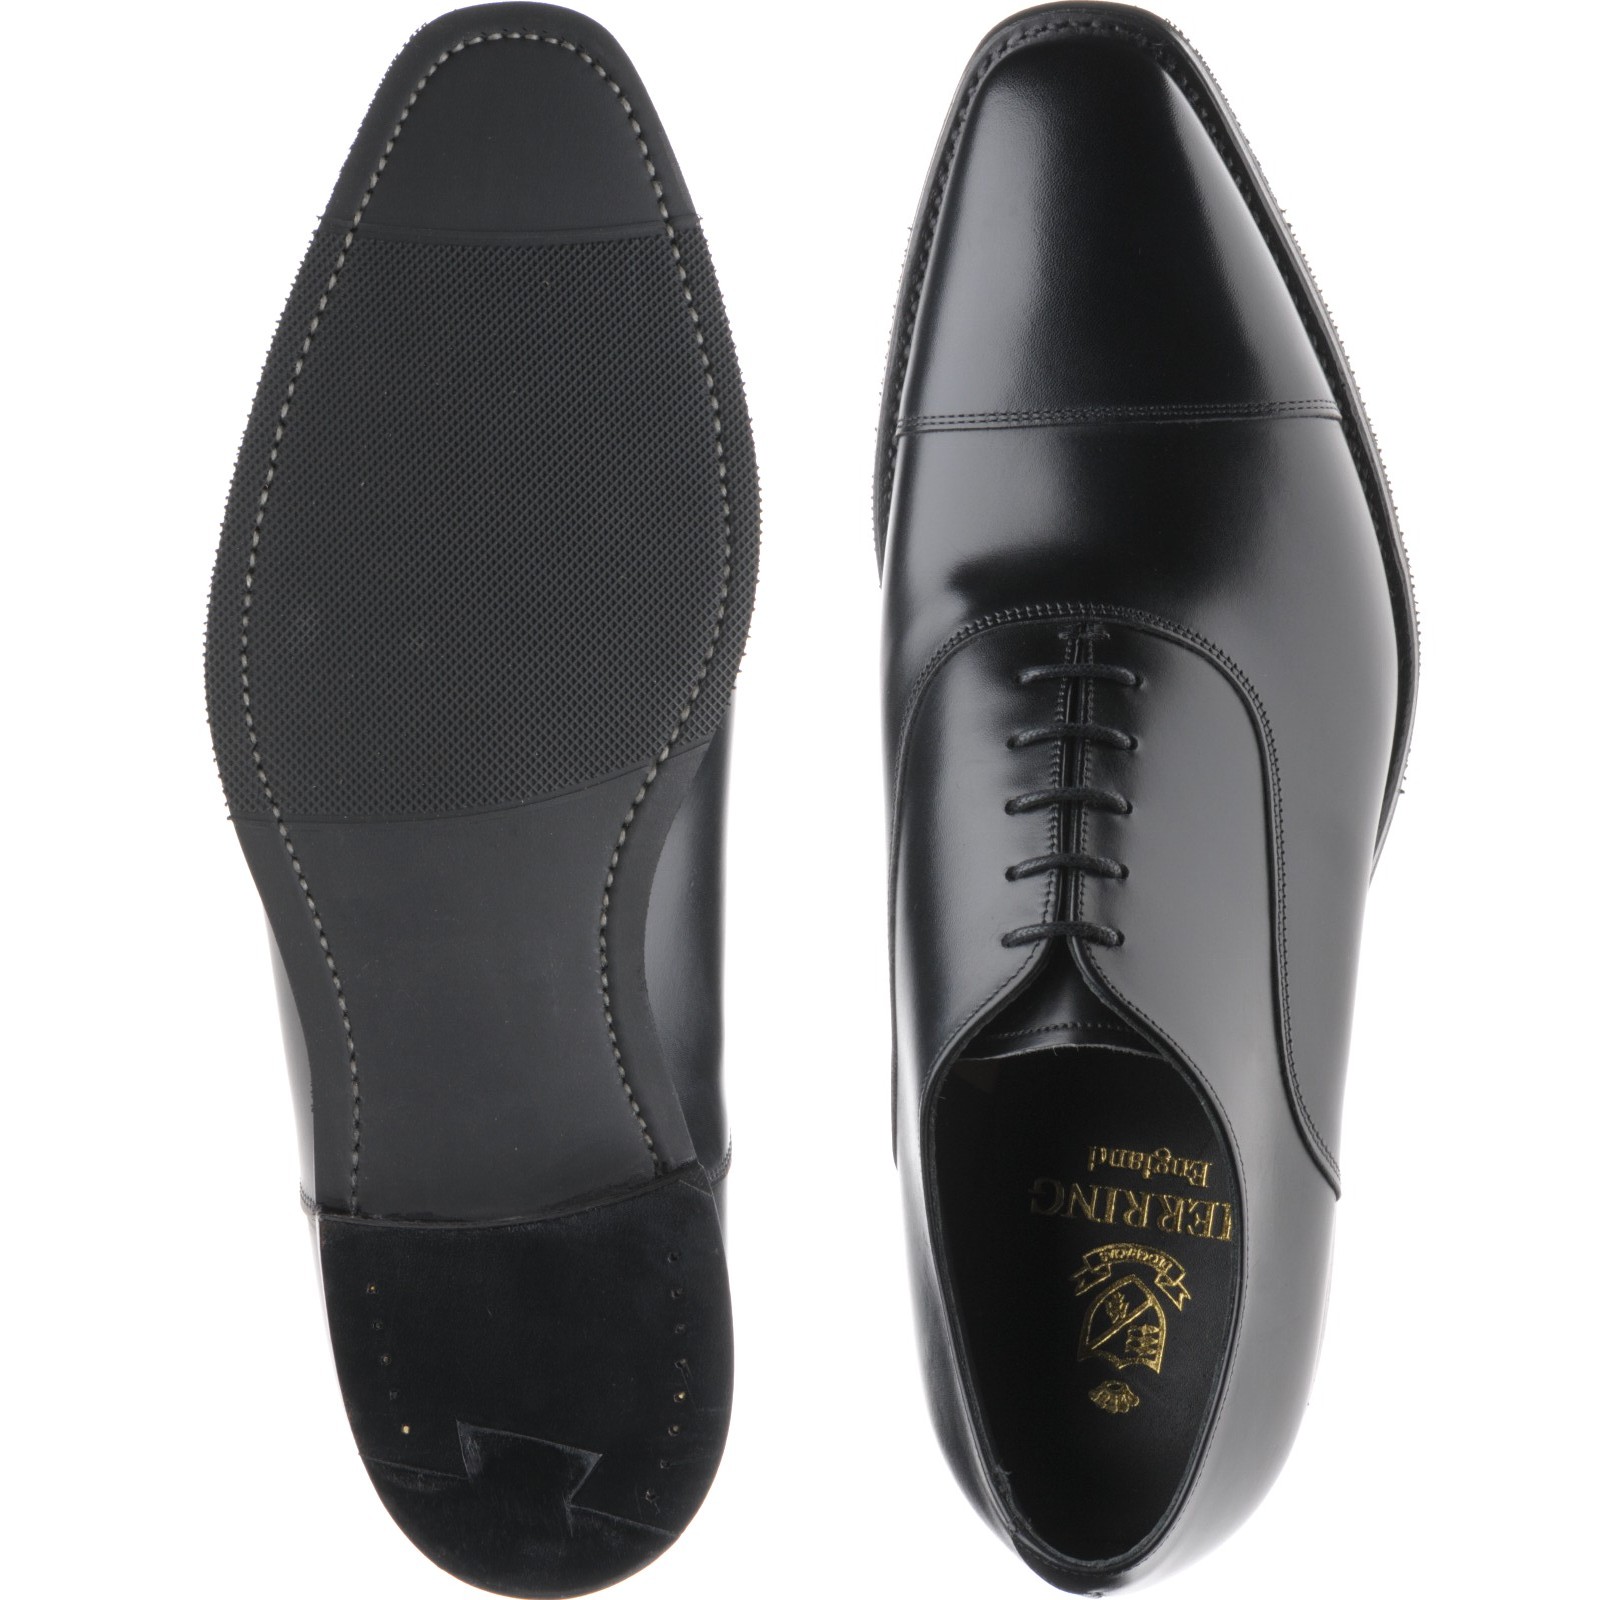 Herring shoes | Herring Premier | Churchill II (Rubber) rubber-soled ...